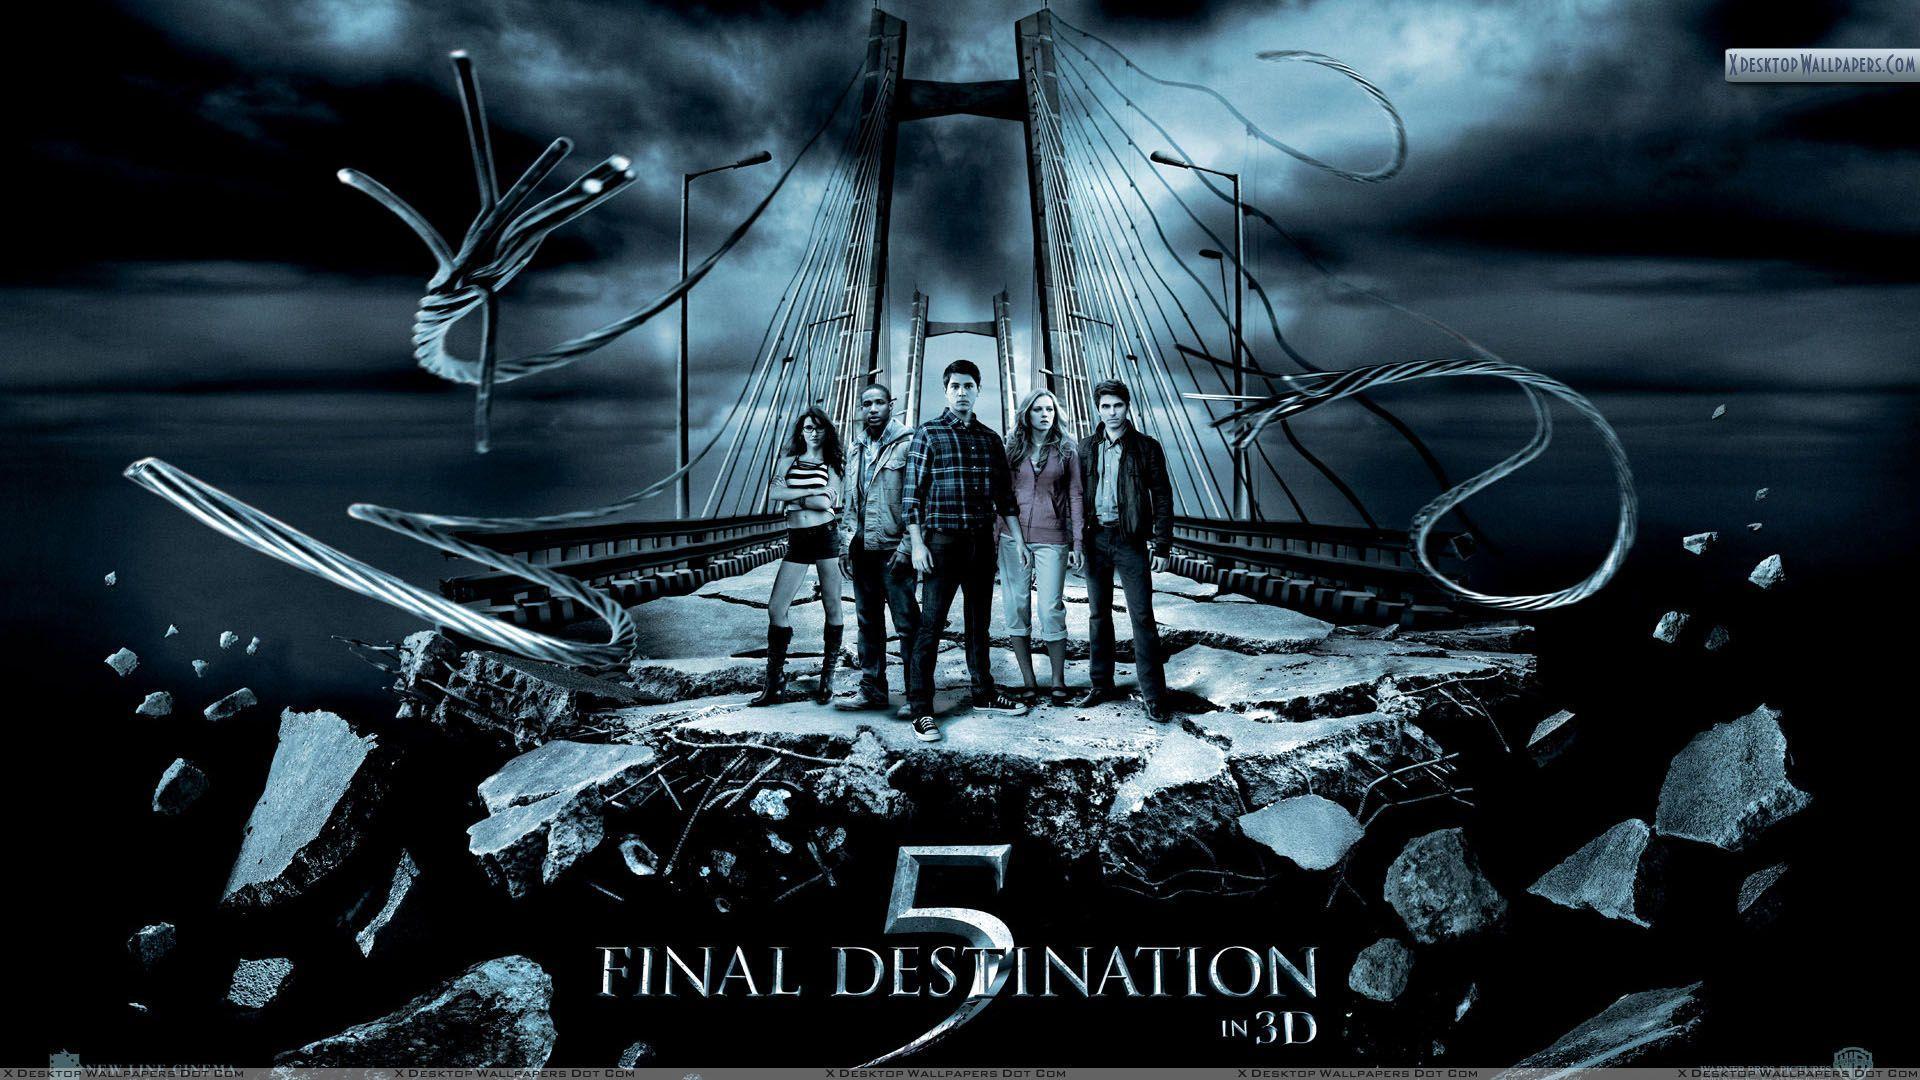 Final Destination 5 Wallpaper, Photo & Image in HD